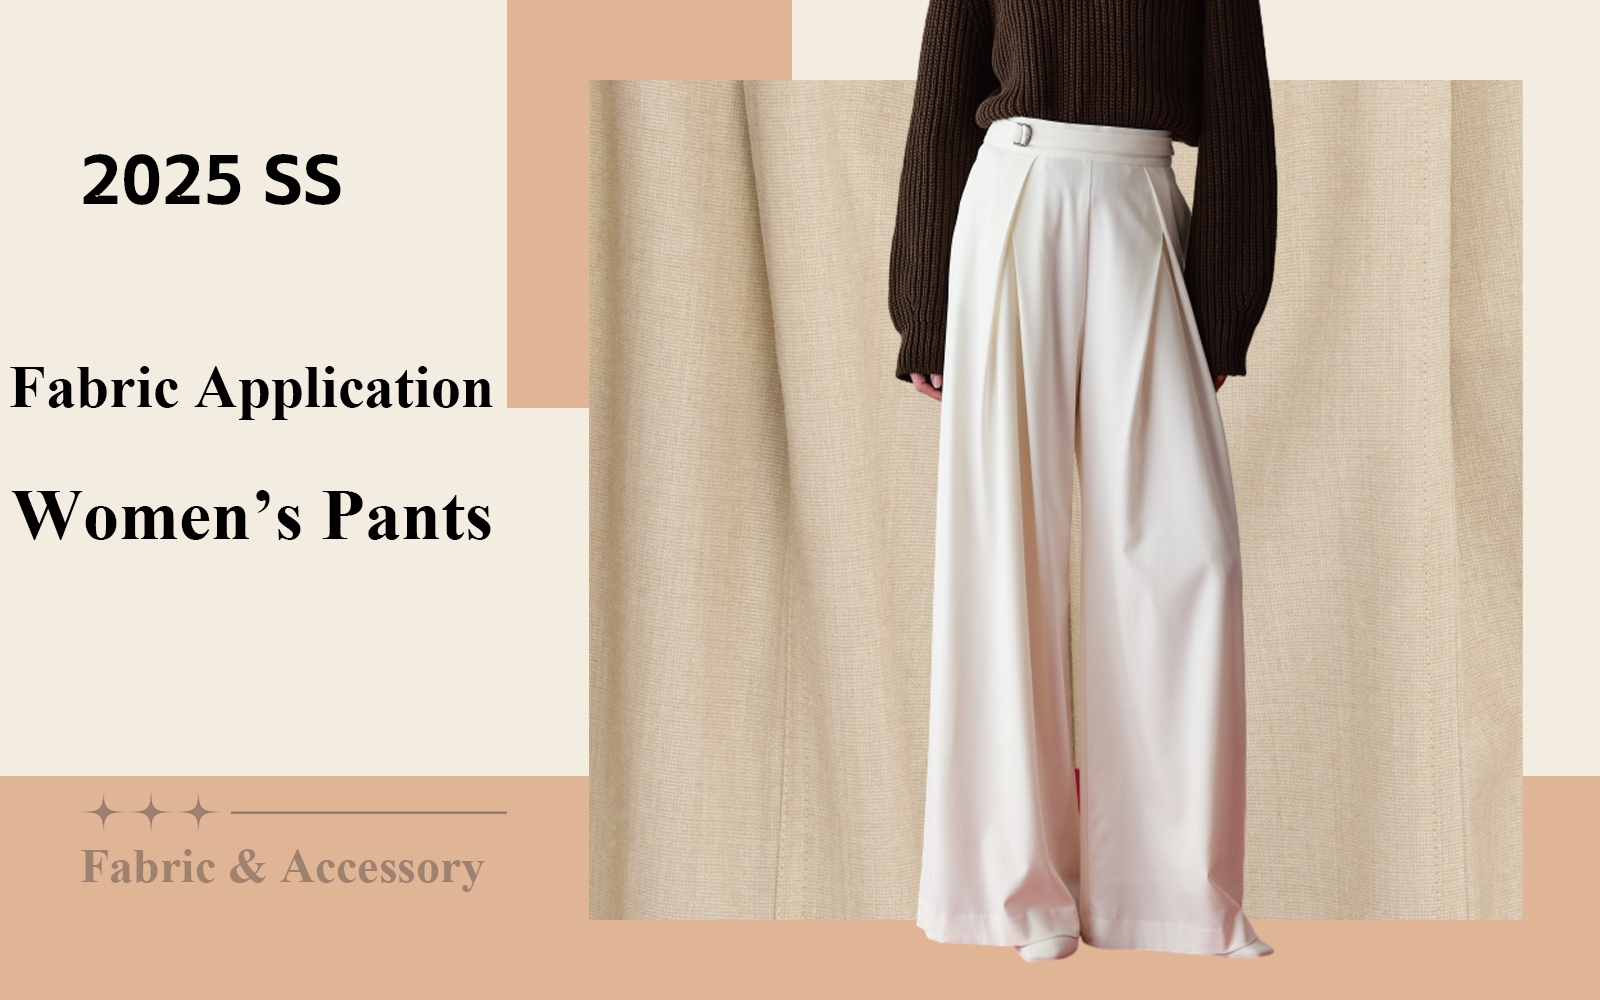 Quiet Luxury -- The Fabric Trend for Women's Pants